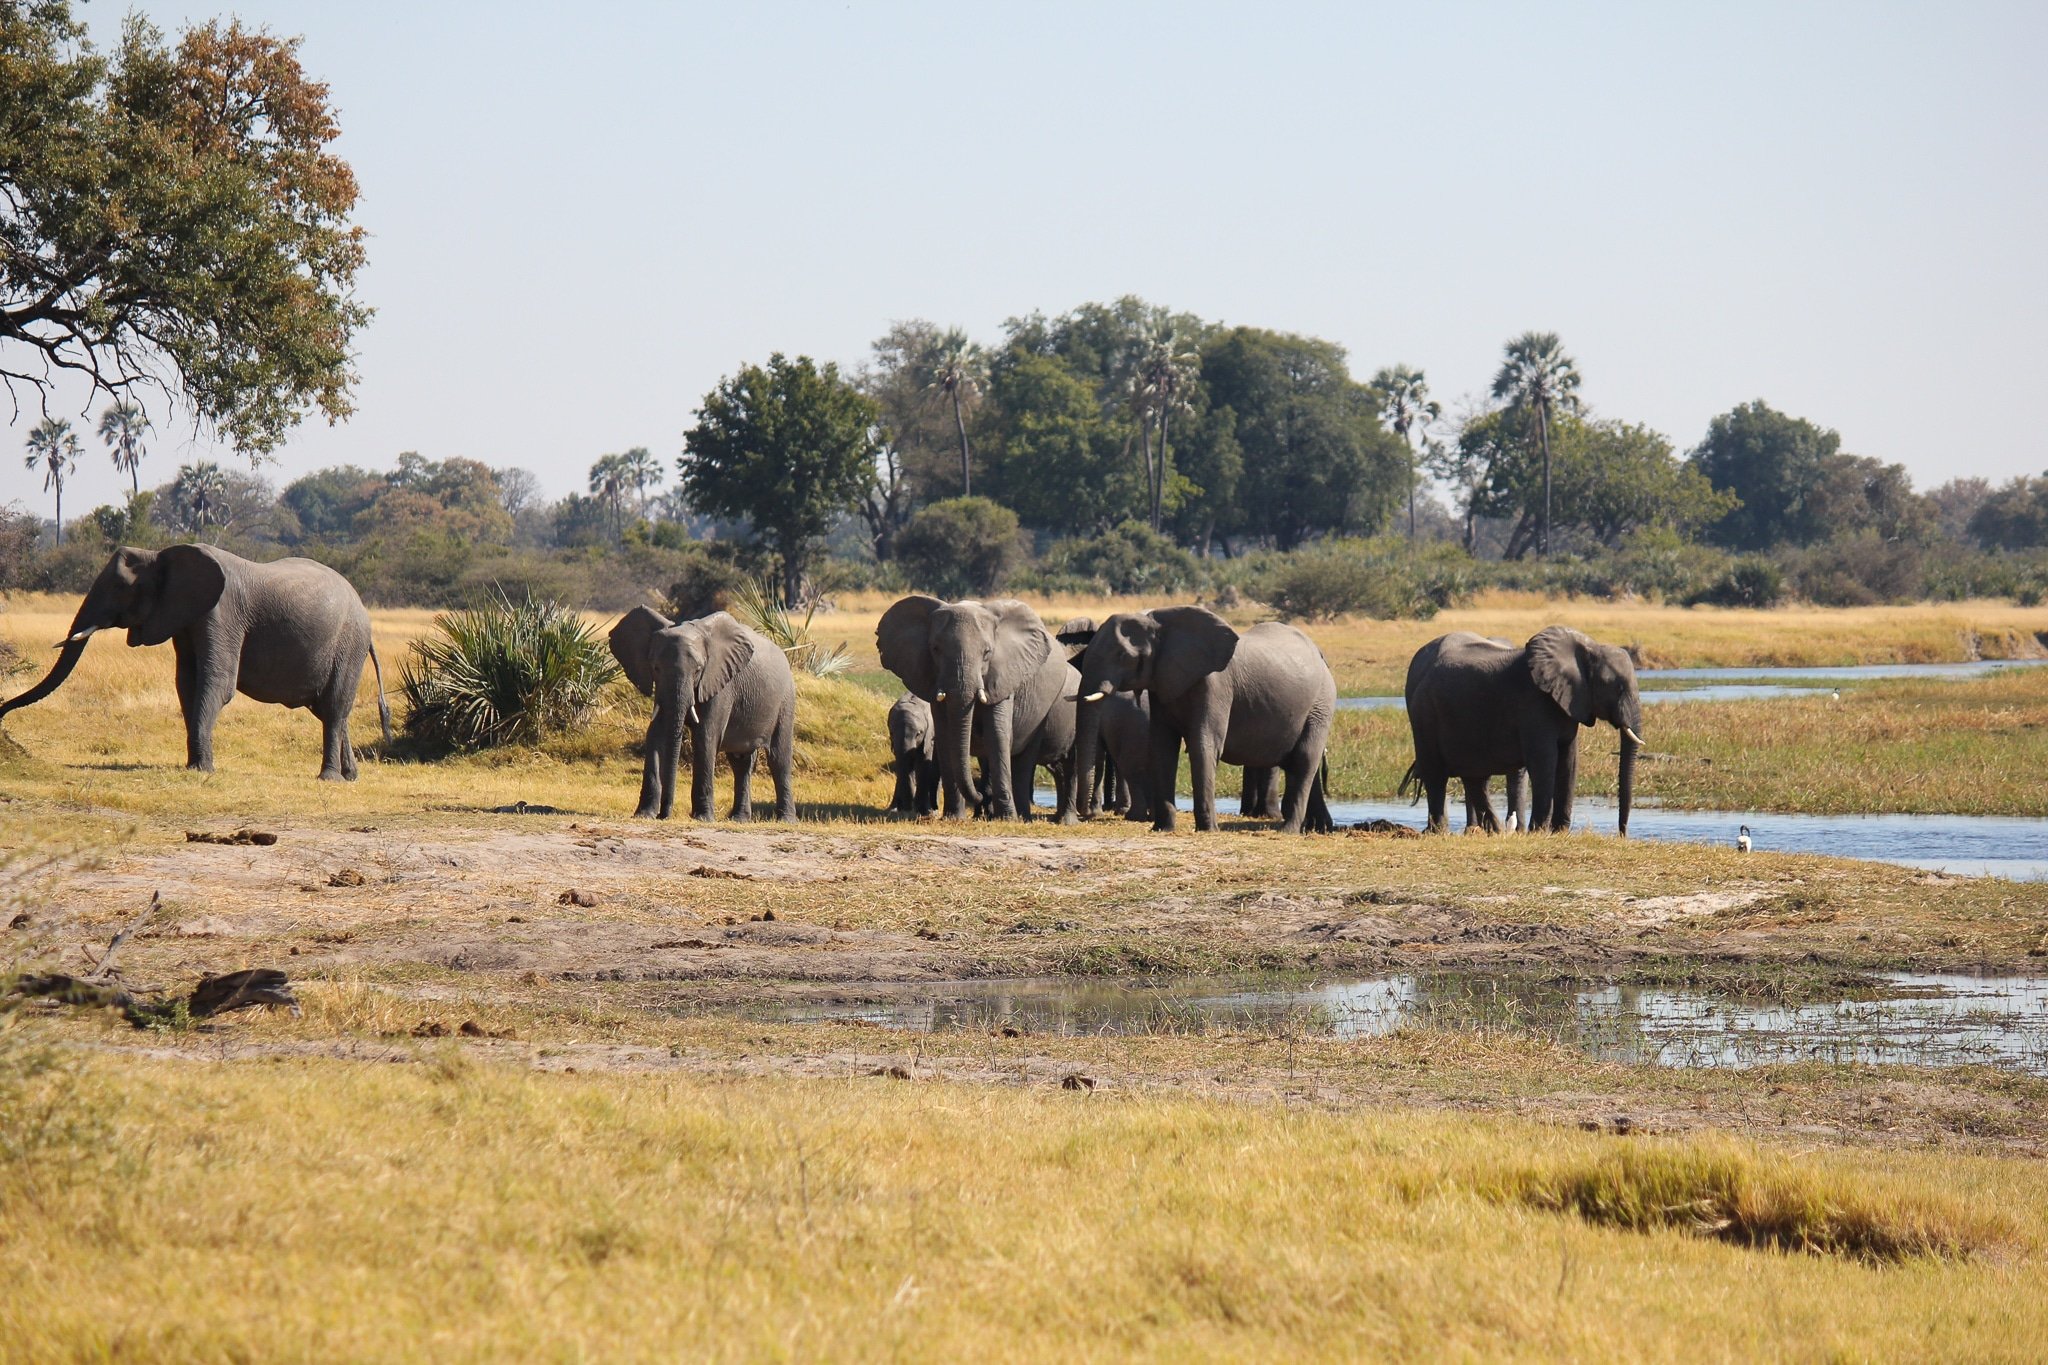 Safari Honeymoon- Elephants in the Okavango Delta